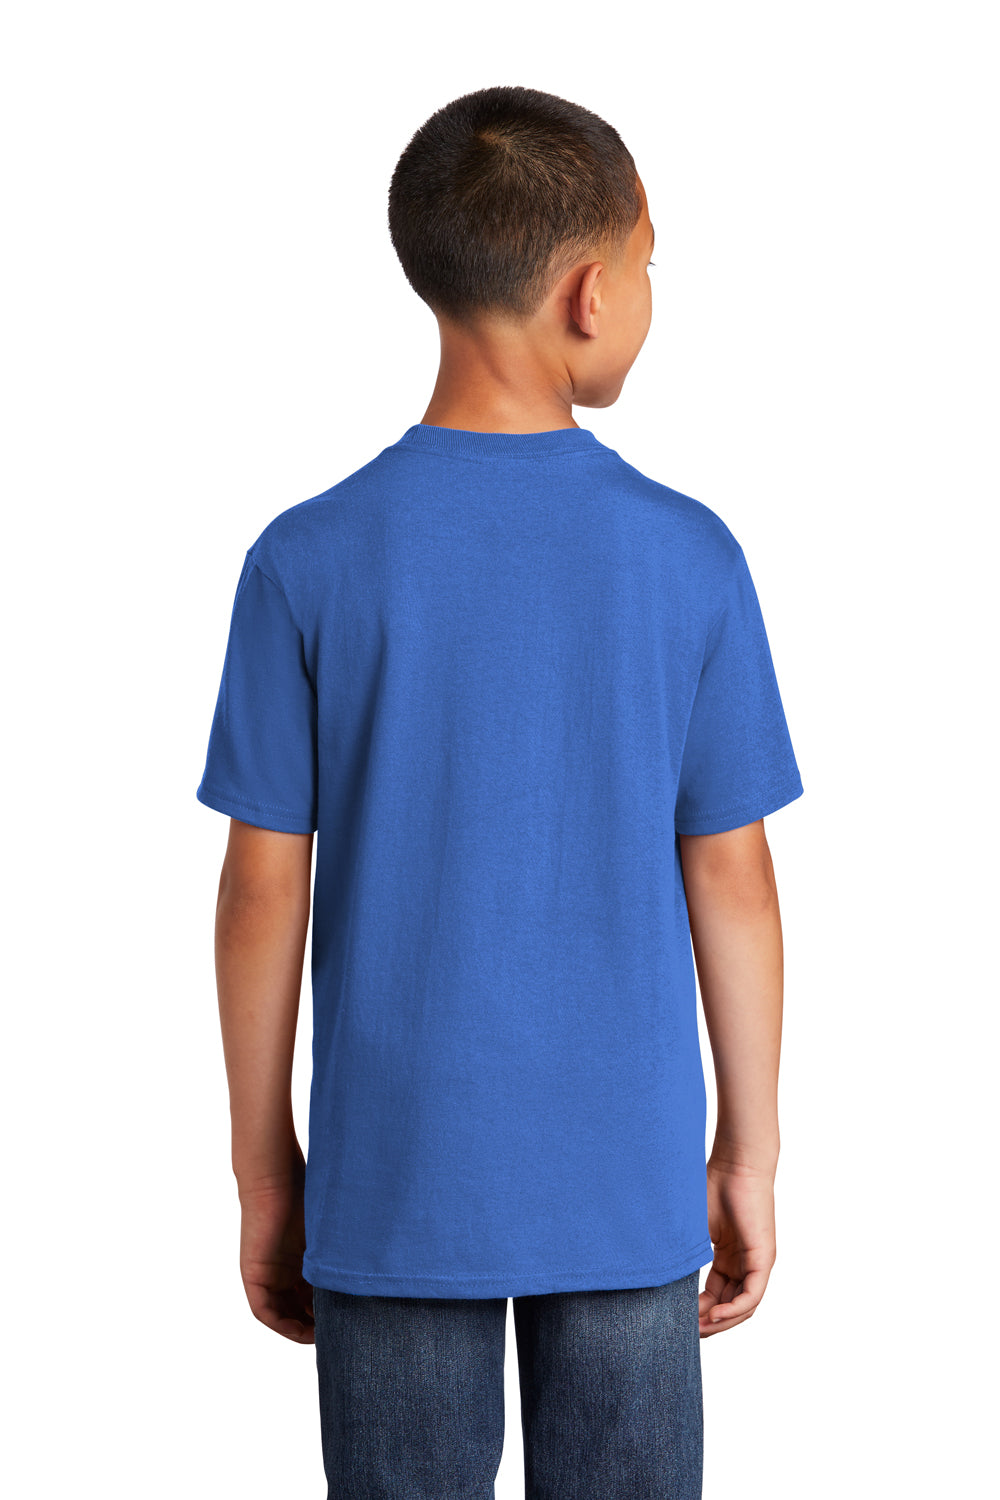 Port & Company PC54Y Youth Core Short Sleeve Crewneck T-Shirt Royal Blue Back